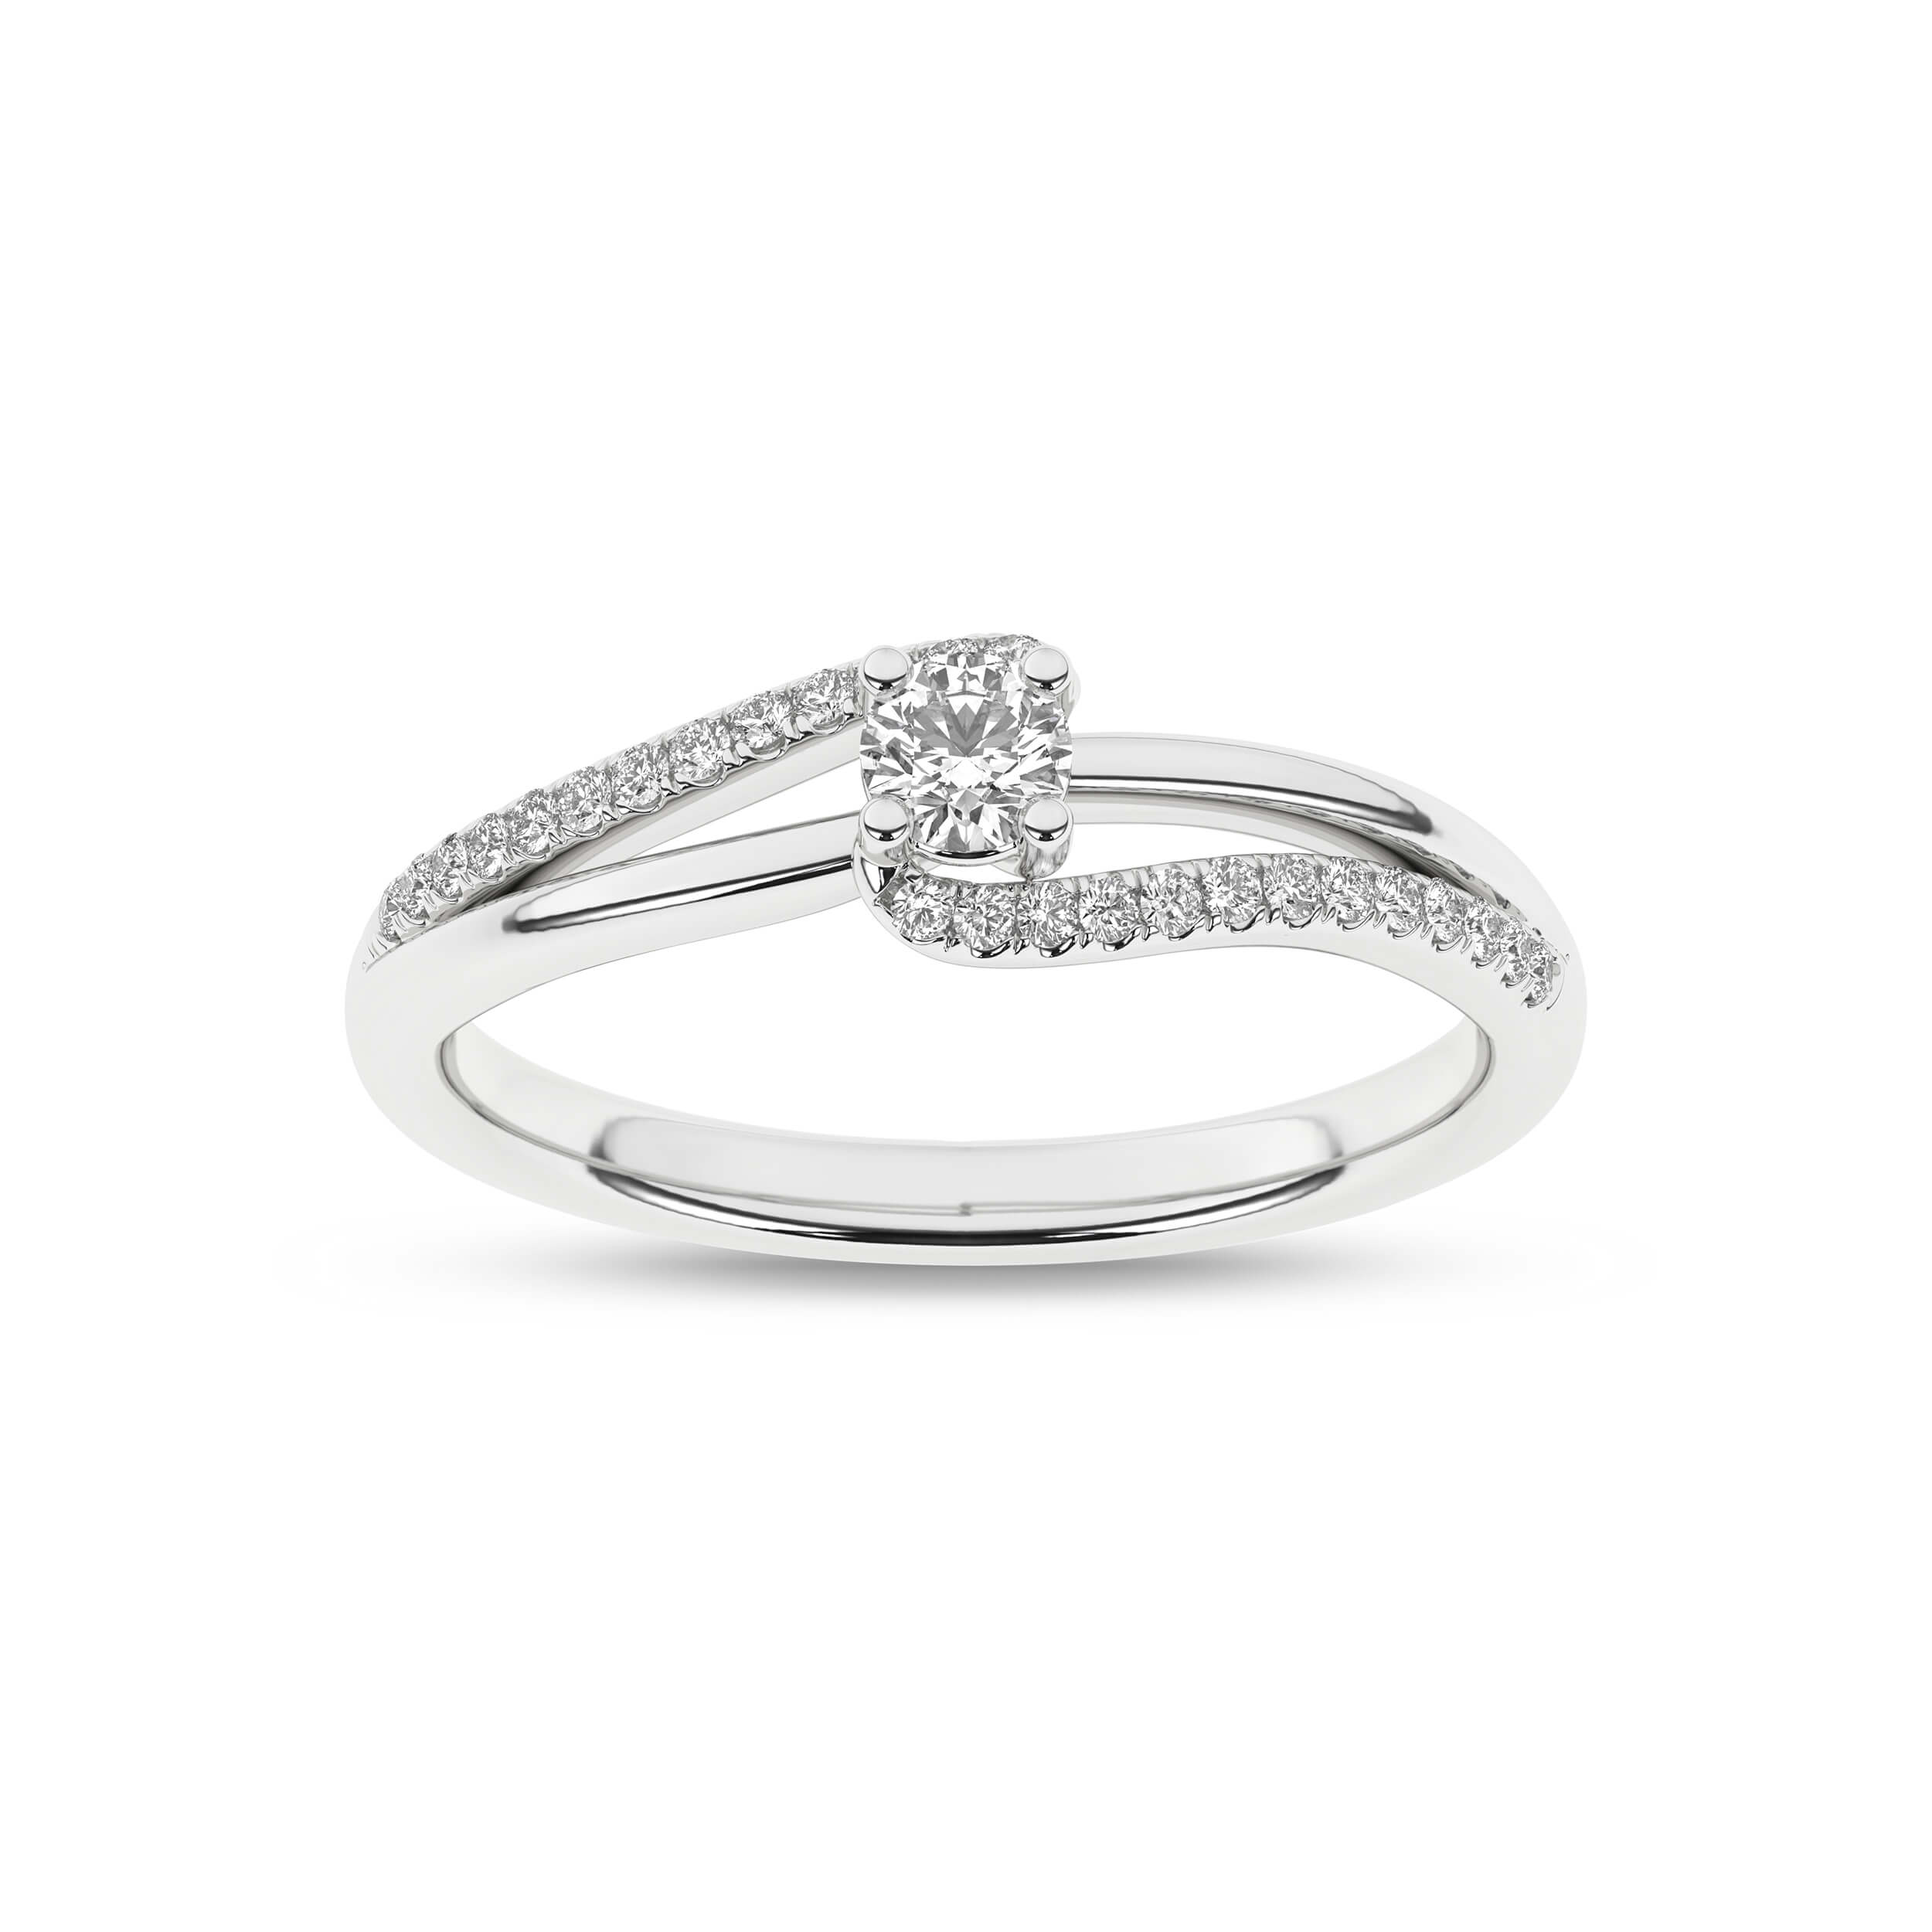 Inel de logodna din Aur Alb 14K cu Diamante 0.25Ct, articol RB17788EG, previzualizare foto 1